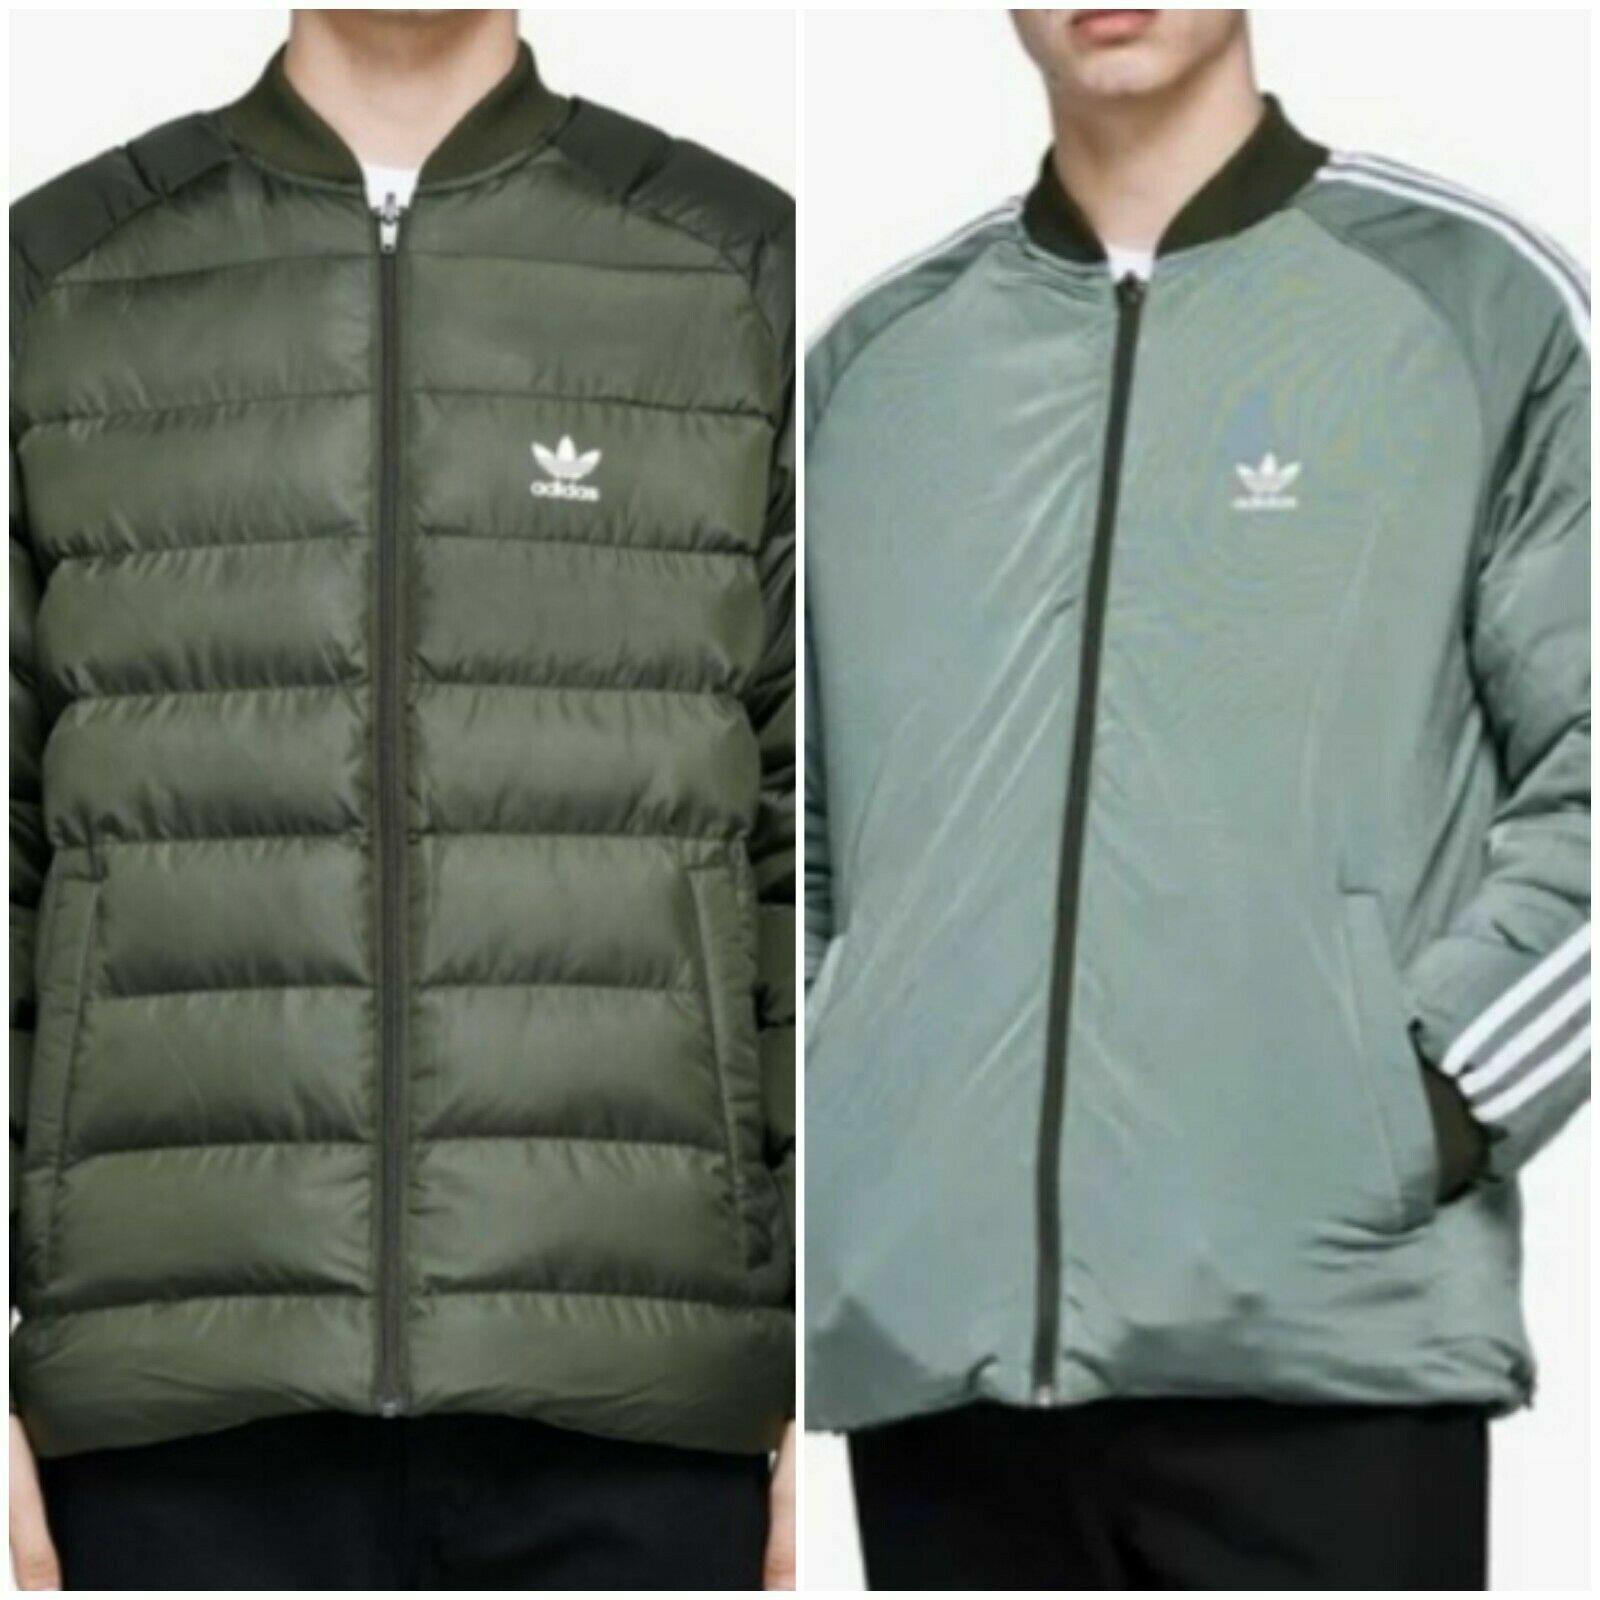 Adidas Originals Sst Superstar Reversible Winter Zip Jacket Coat Olive Small Sm